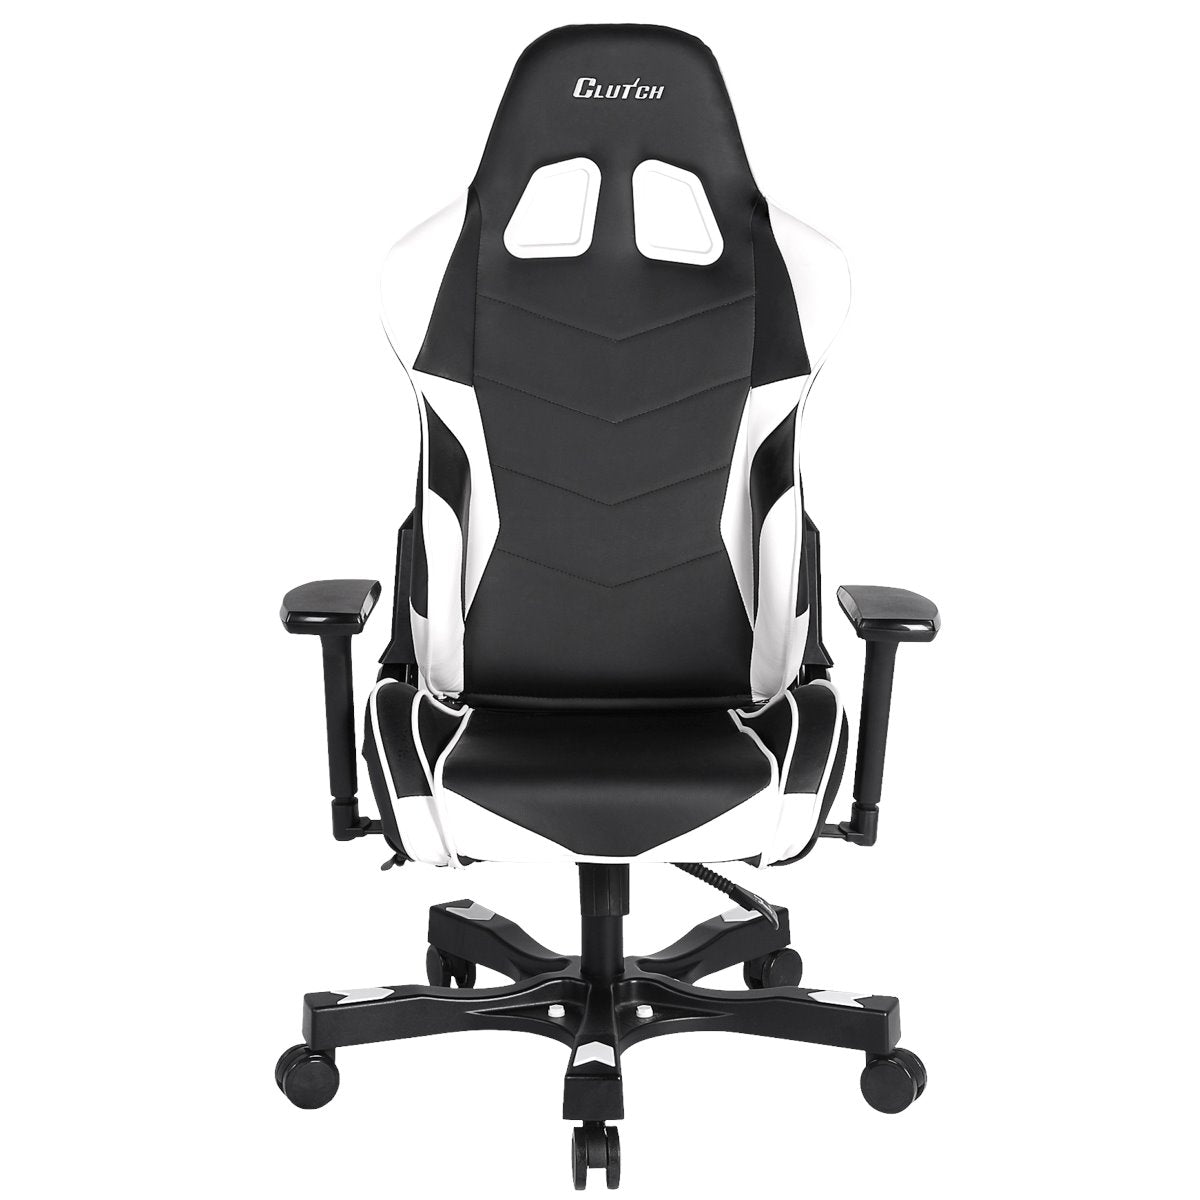 Crank Series - (Small-Medium) Gaming Chair Clutch Chairz 